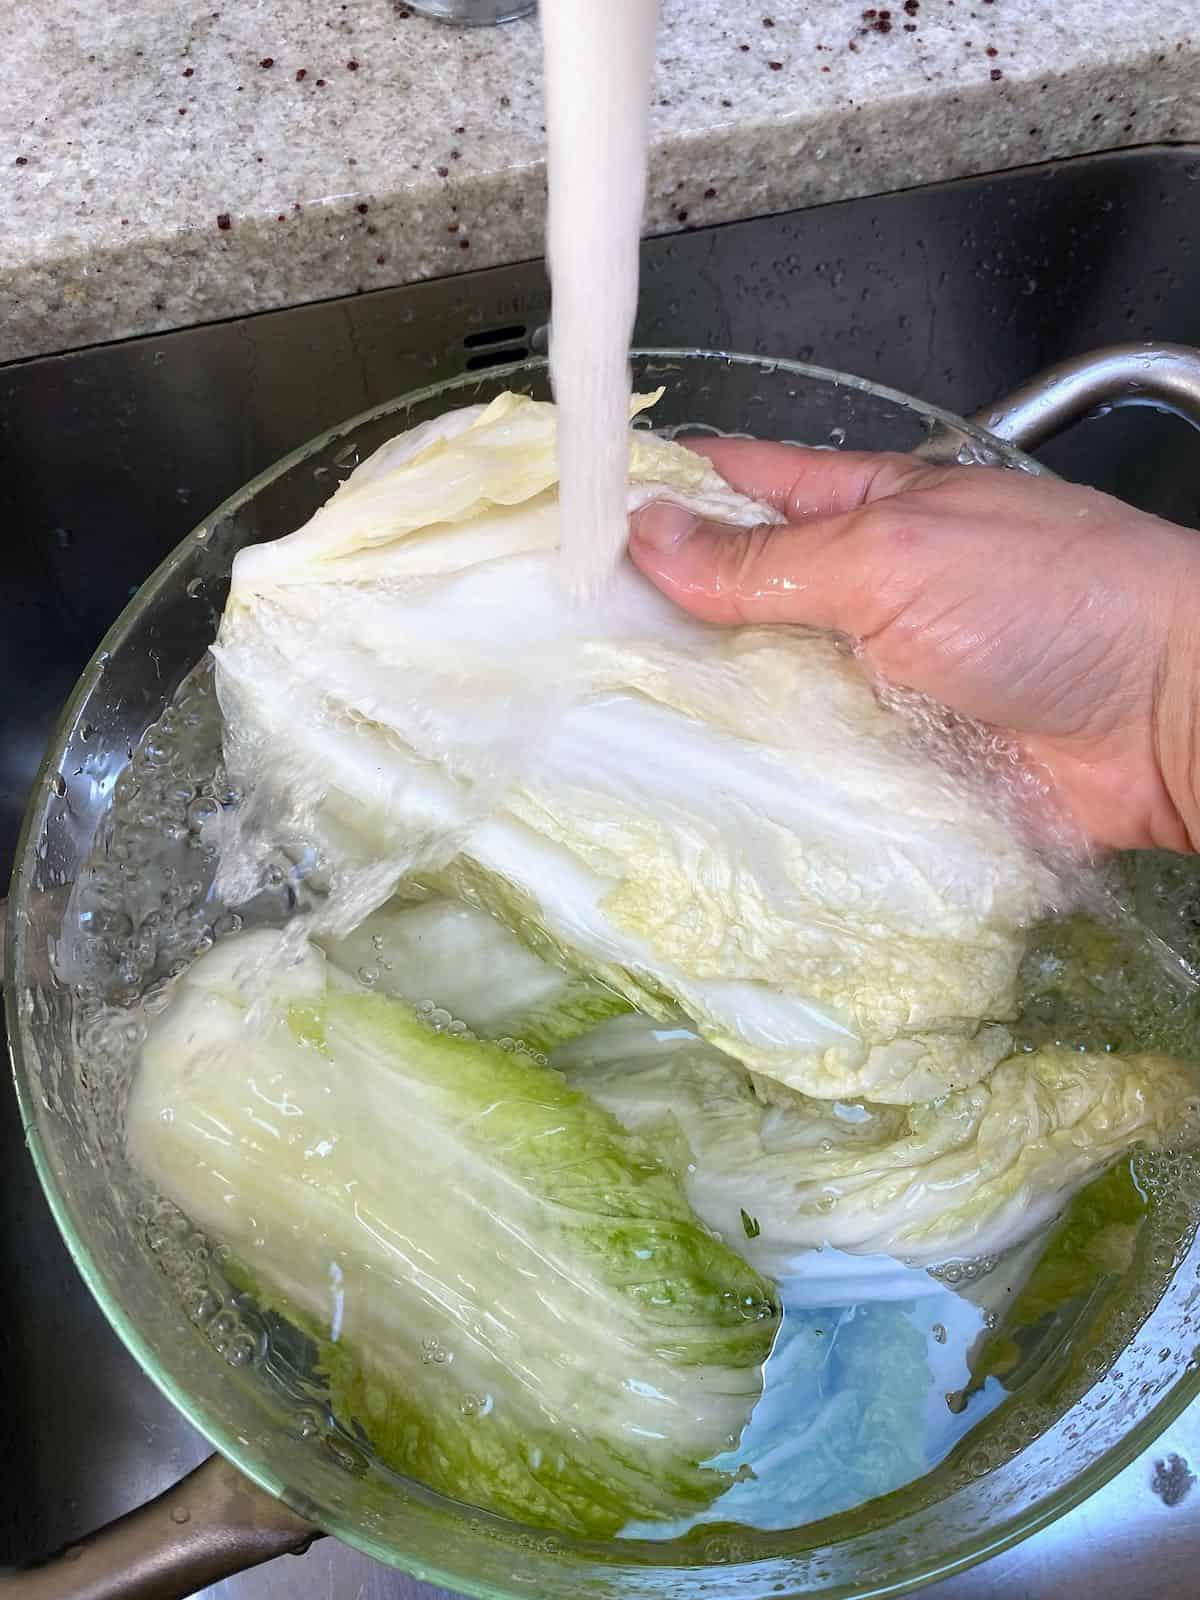 Rinsing cabbage under water